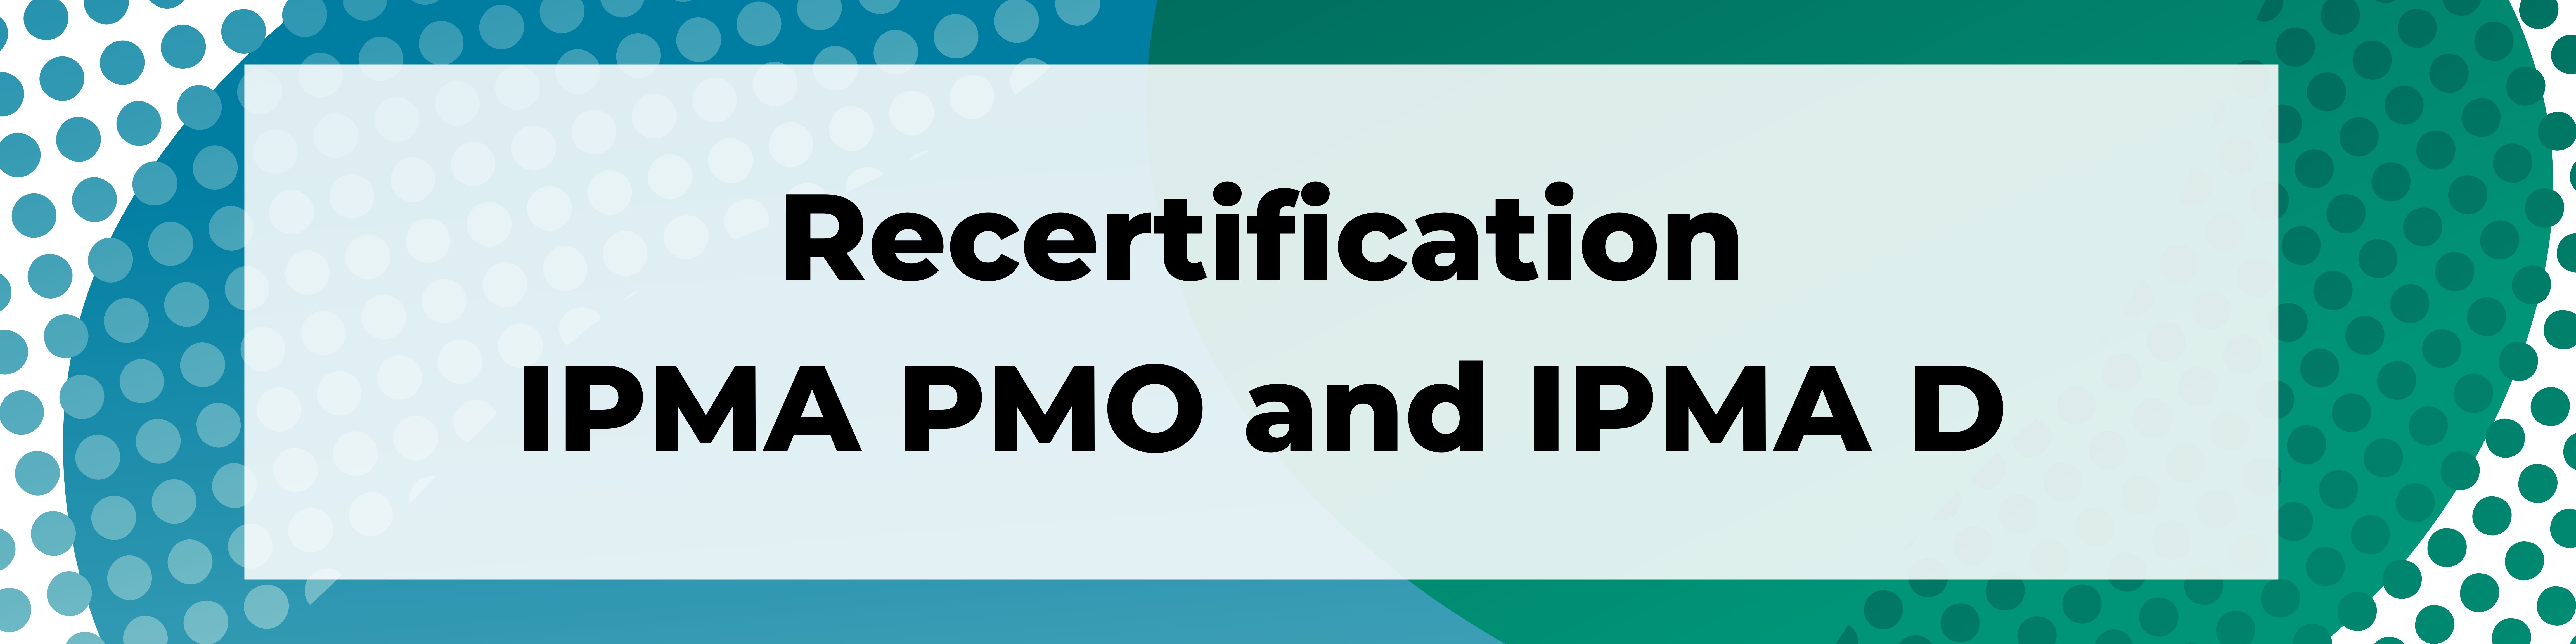 Recertification IPMA PMO and IPMA D